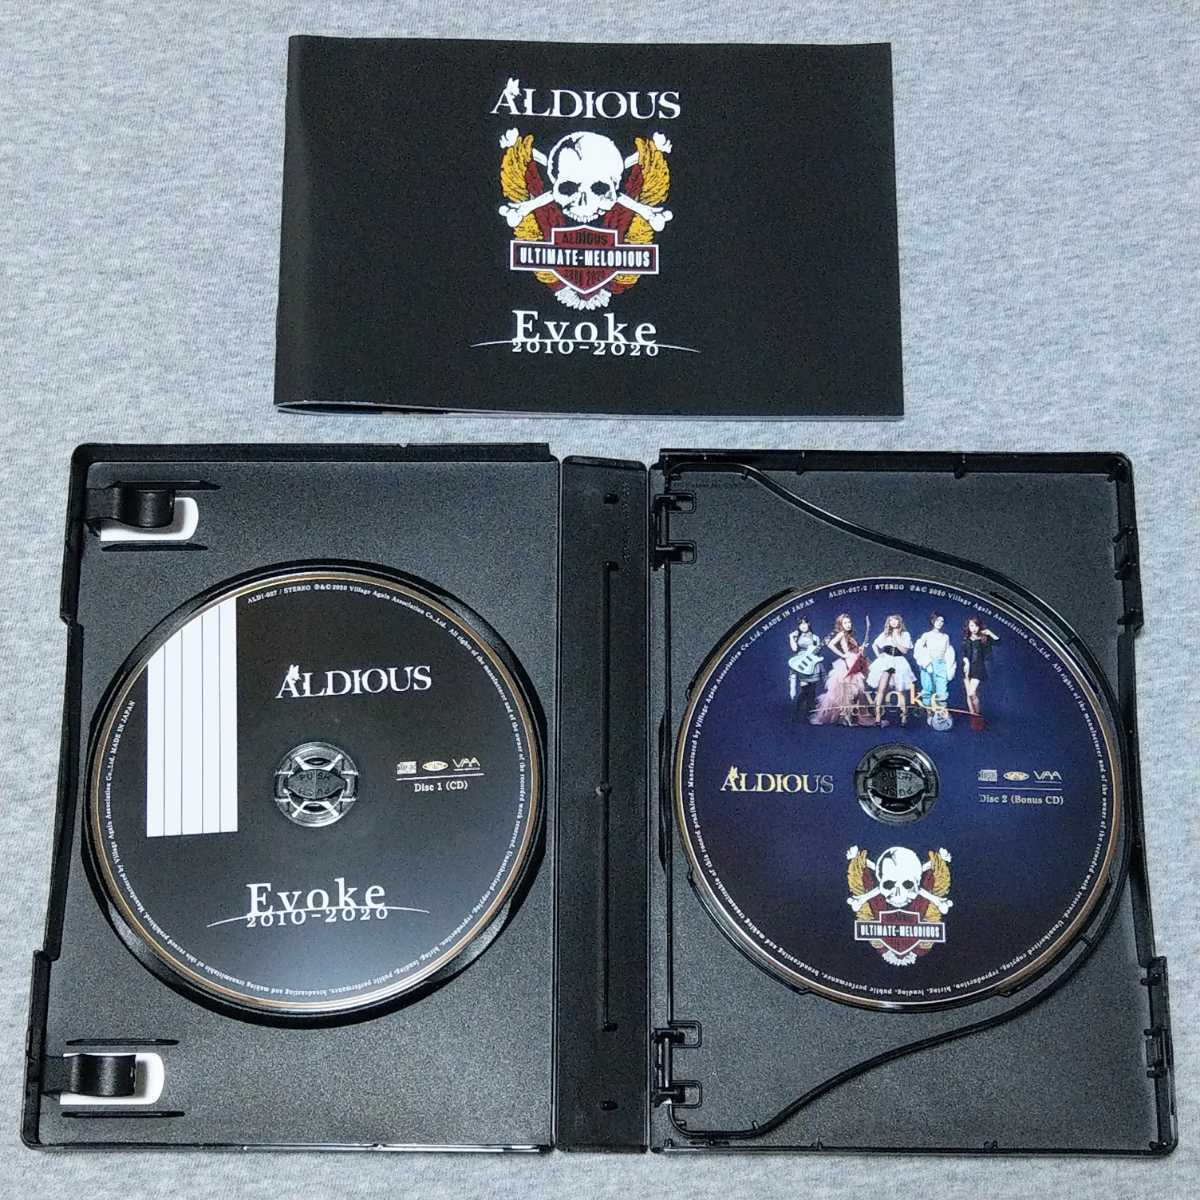 Aldious CD Evoke 2010-2020(オフィシャル・ウェブサイト限定 ...